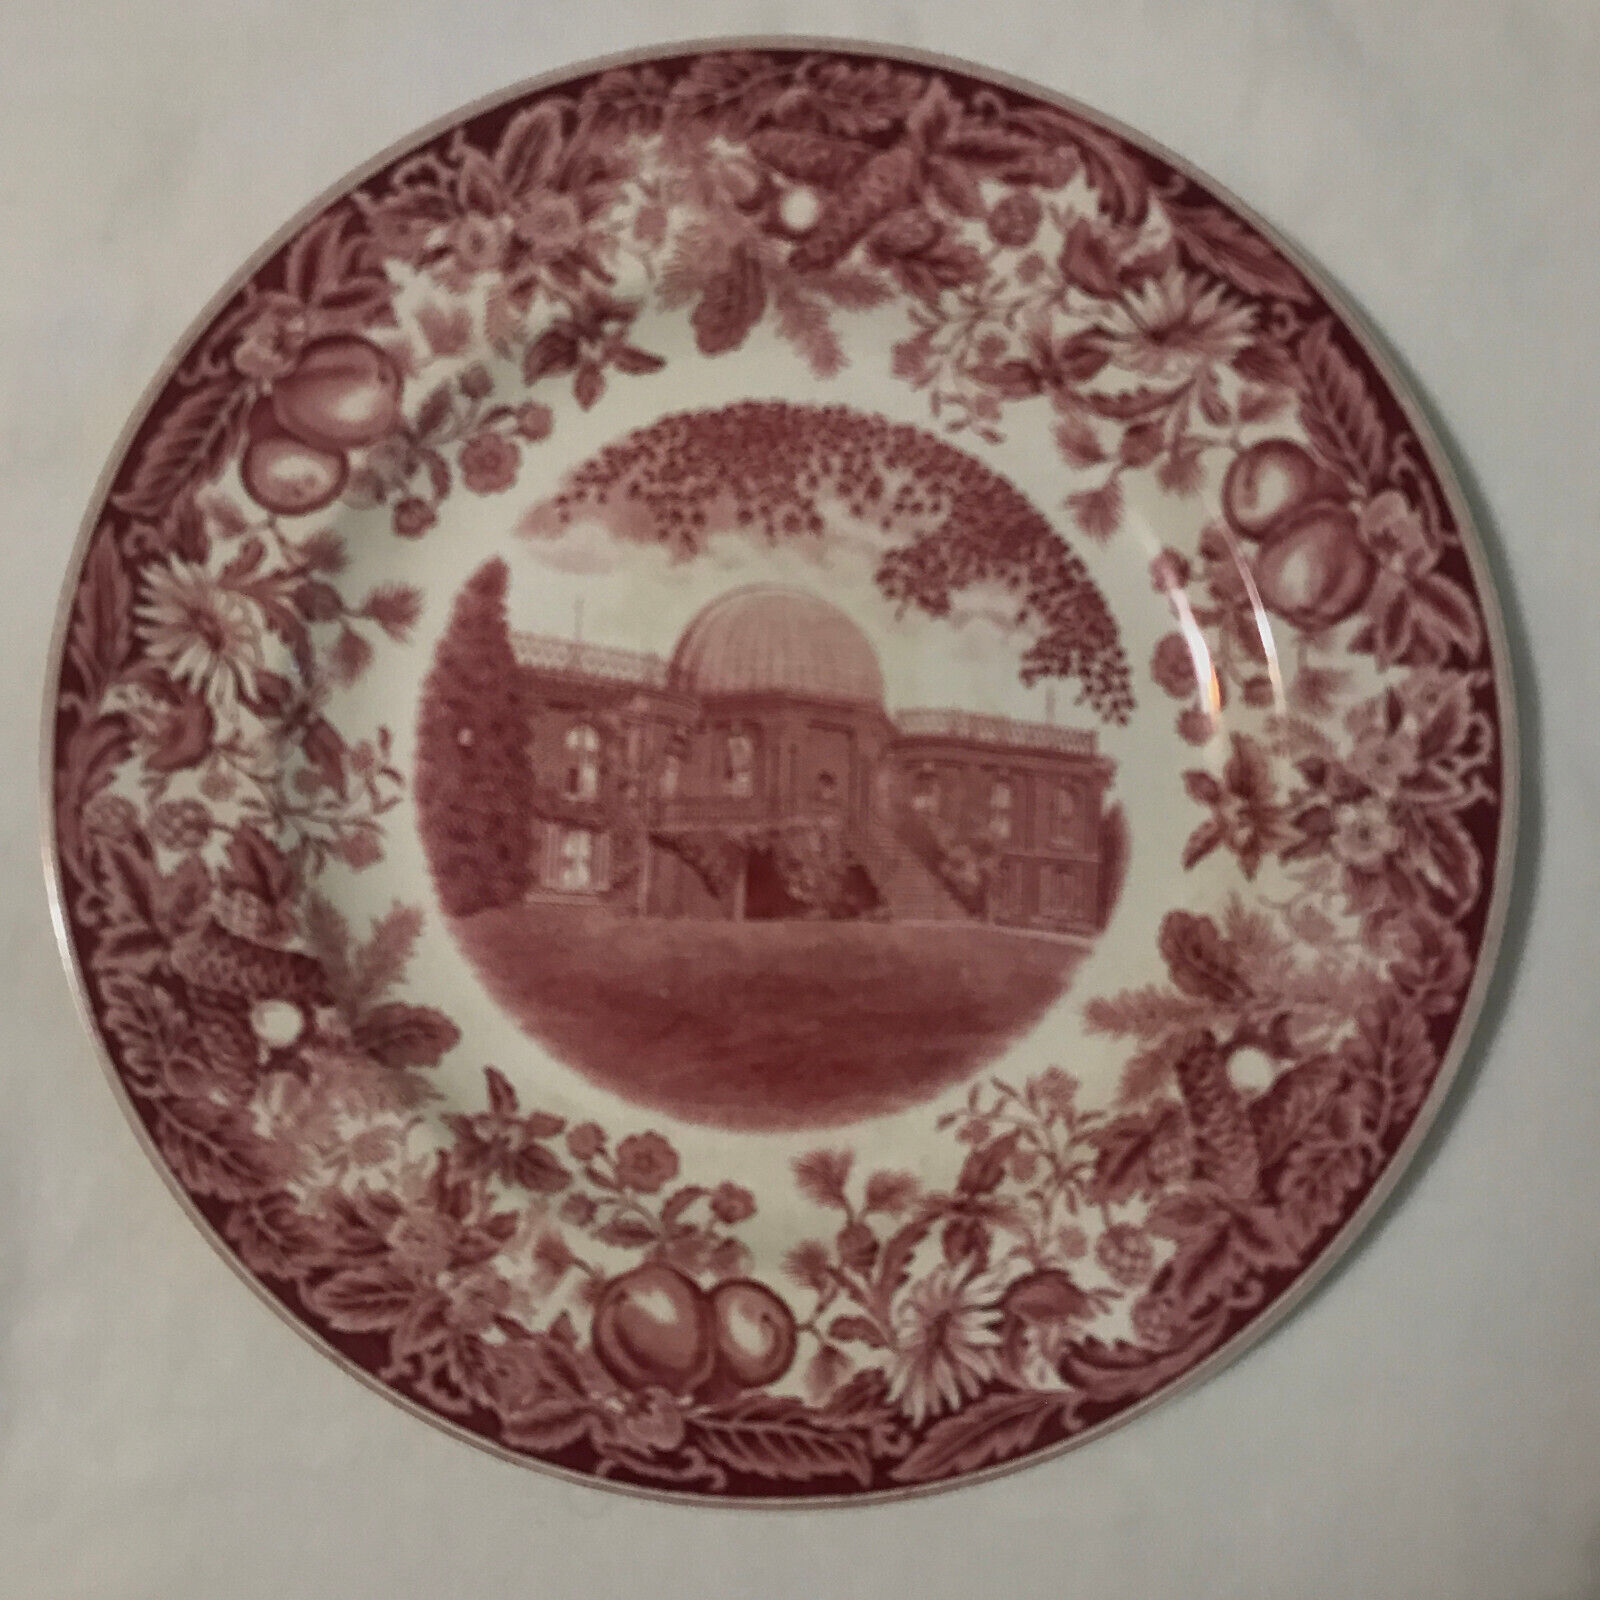 Vassar College Rare Wedgwood Commemorative Plate - The Observatory